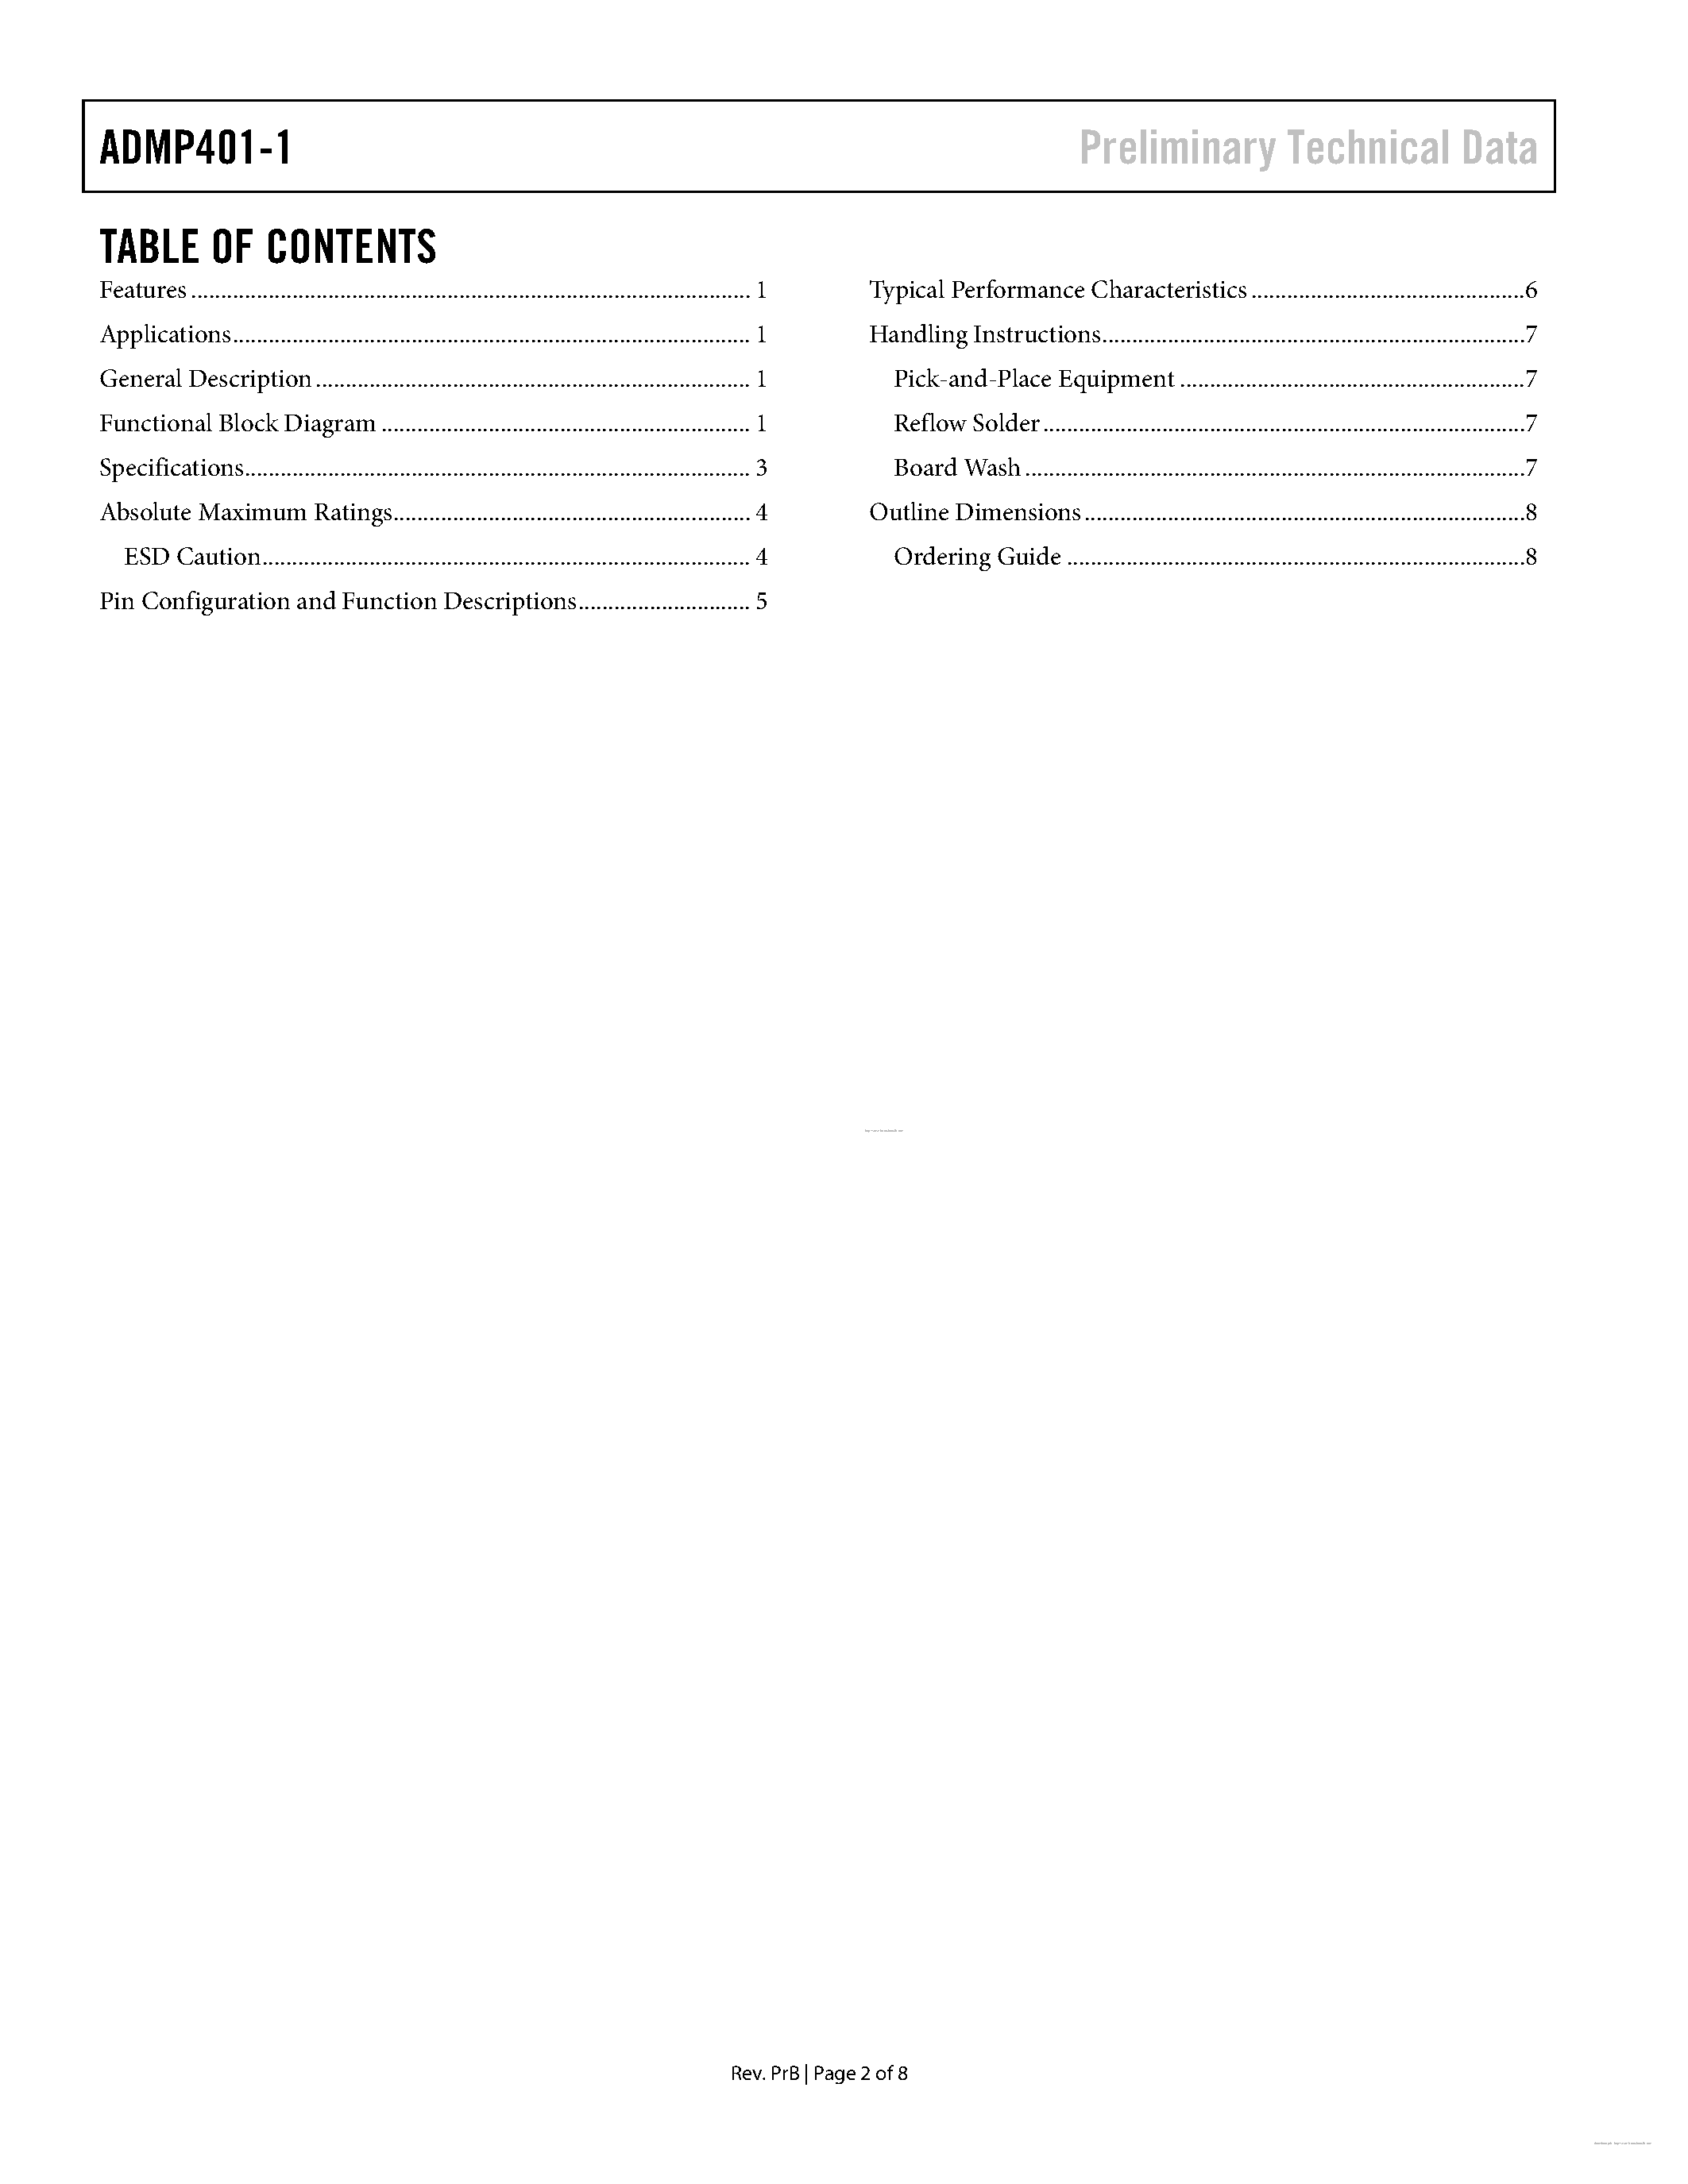 Datasheet ADMP401-1 - page 2